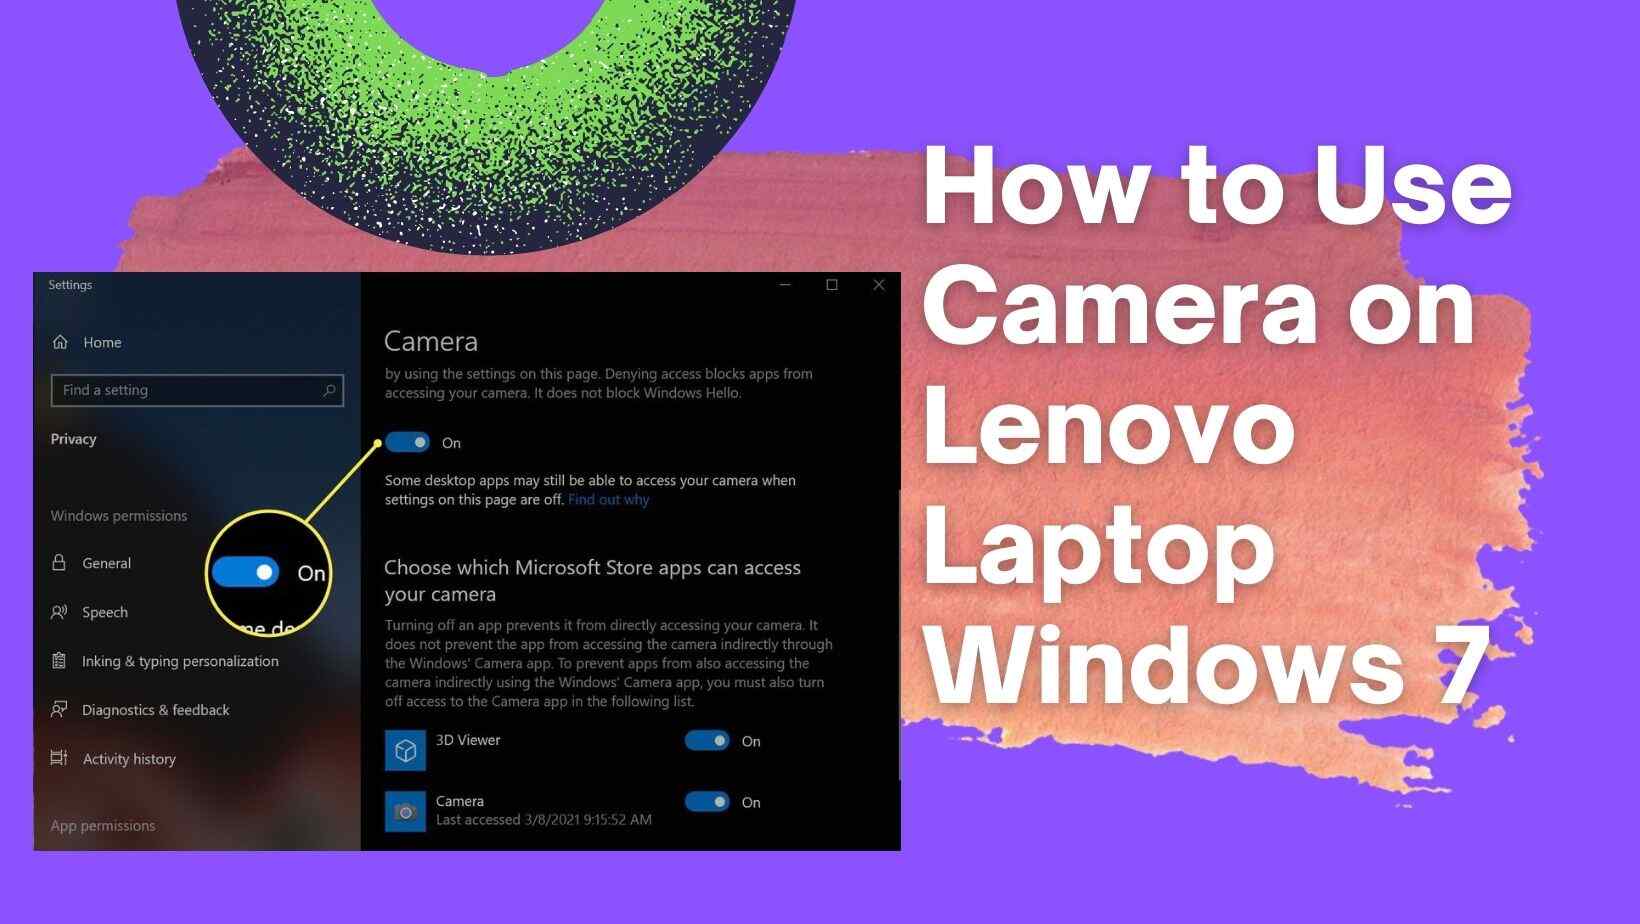 How to Use Camera on Lenovo Laptop Windows 7